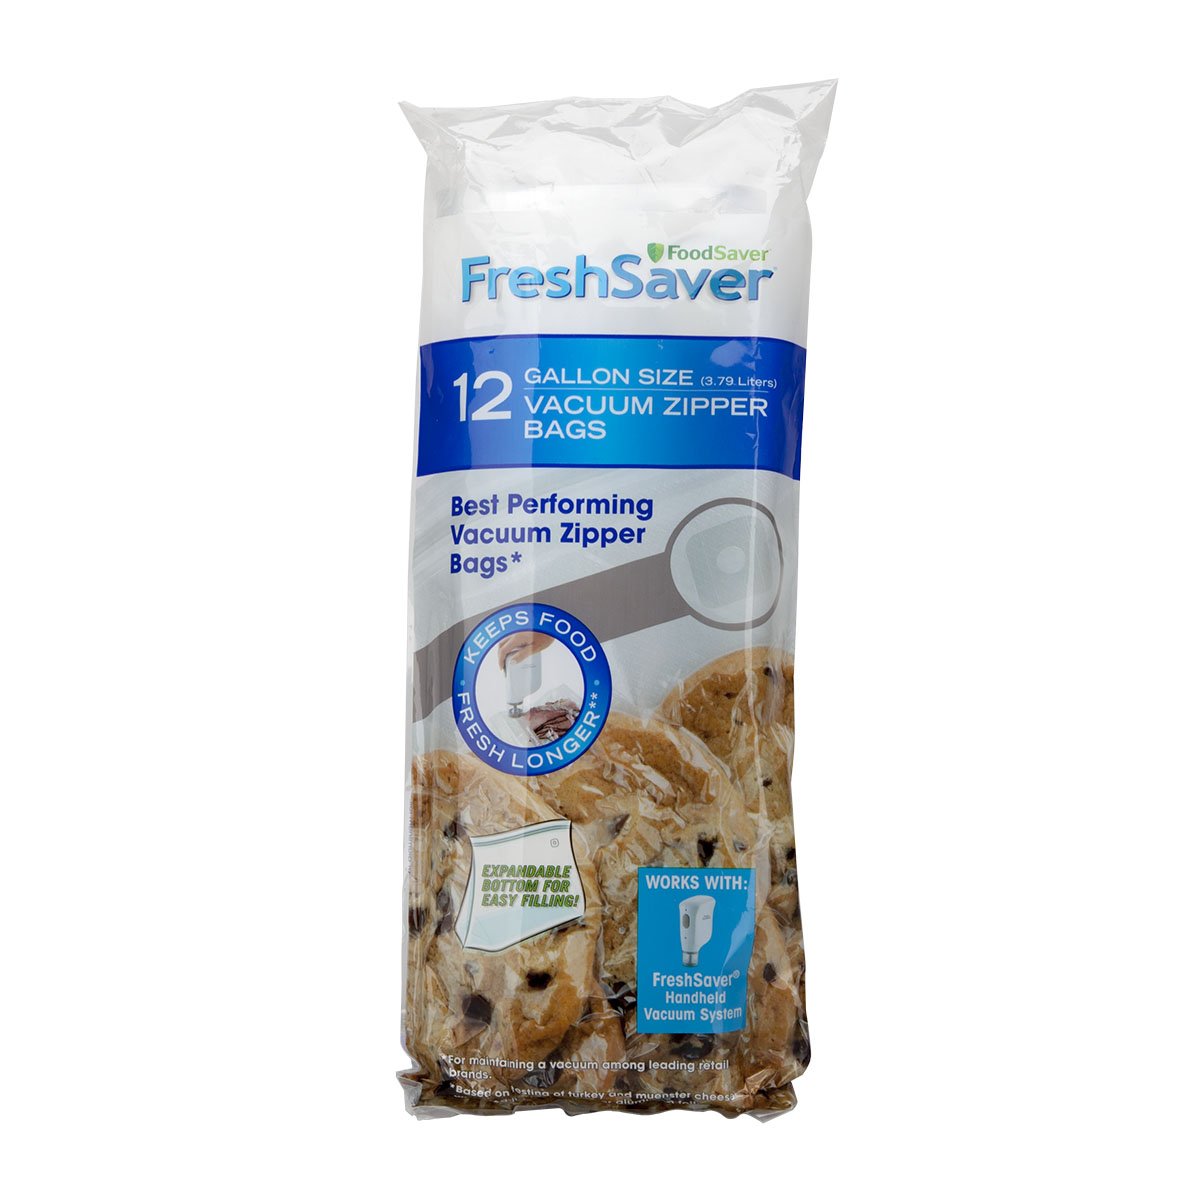 FoodSaver FoodSaver FreshSaver Refrigerator Gallon Zipper Vacuum Sealing Bags 15 Bags New 